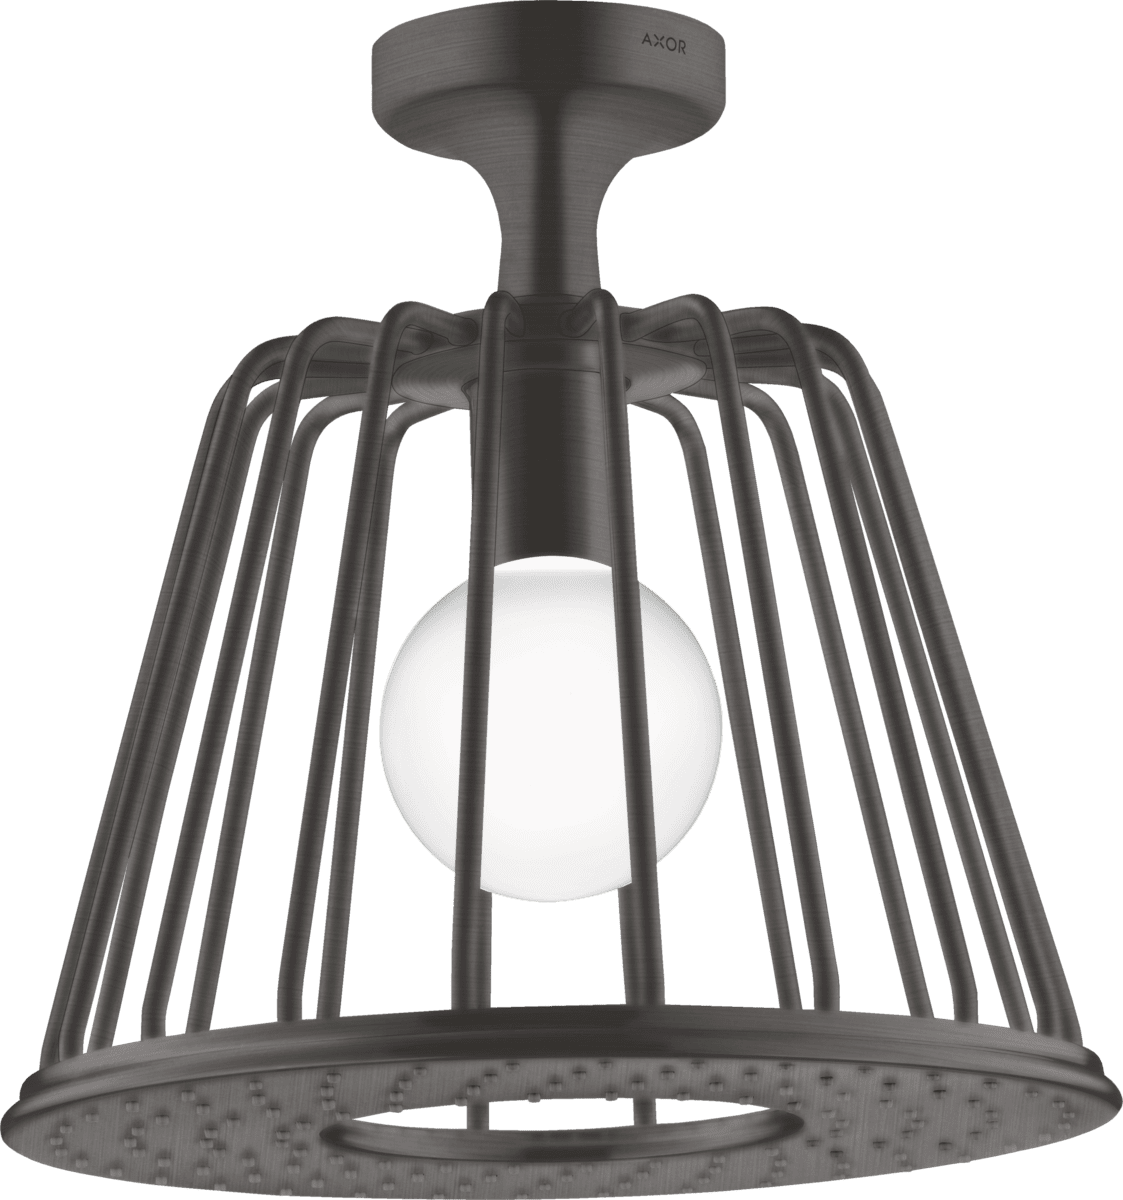 HANSGROHE AXOR LampShower/Nendo LampShower 275 1jet tavan bağlantılı #26032340 - Mat Siyah Krom resmi